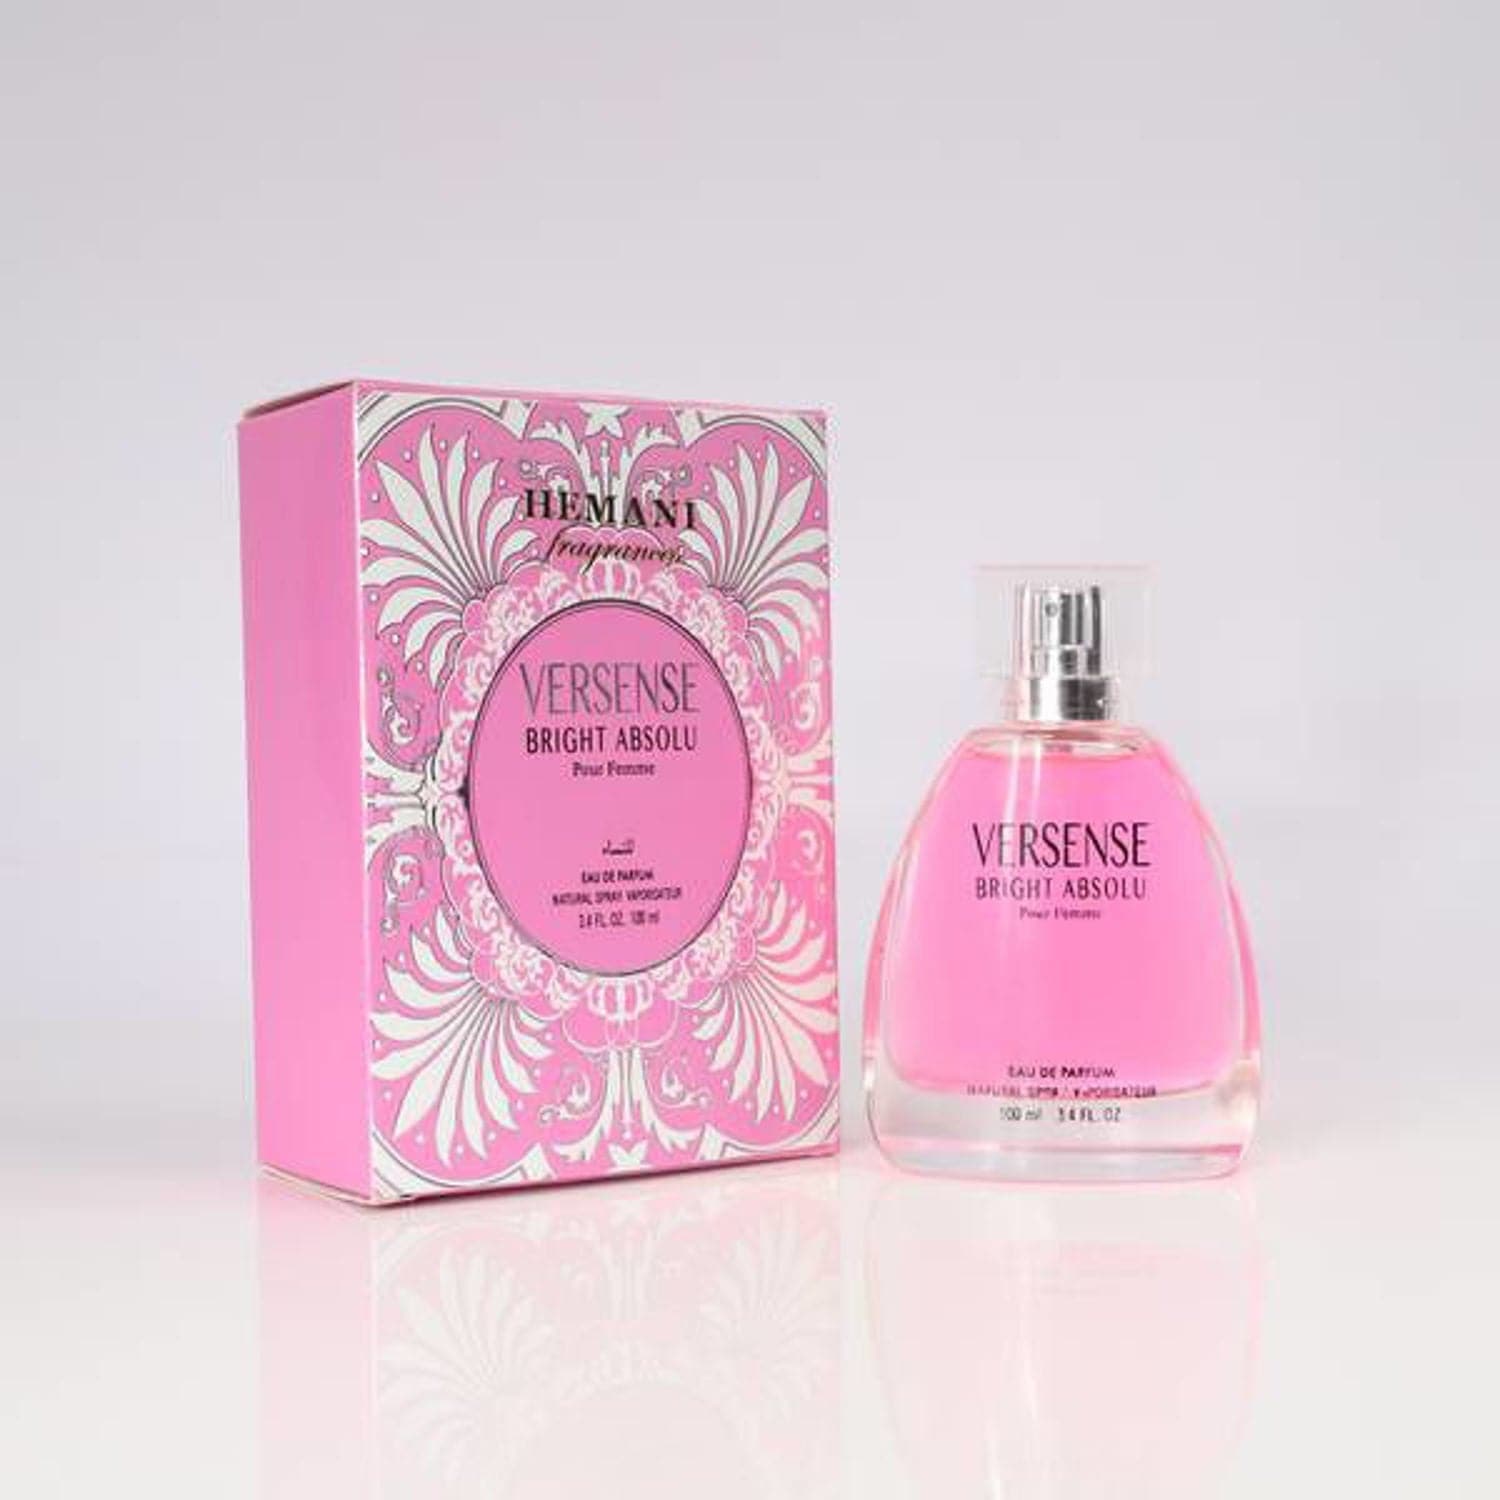 Hemani Versense Bright Absolu Perfume 100Ml - Premium  from Hemani - Just Rs 900.00! Shop now at Cozmetica